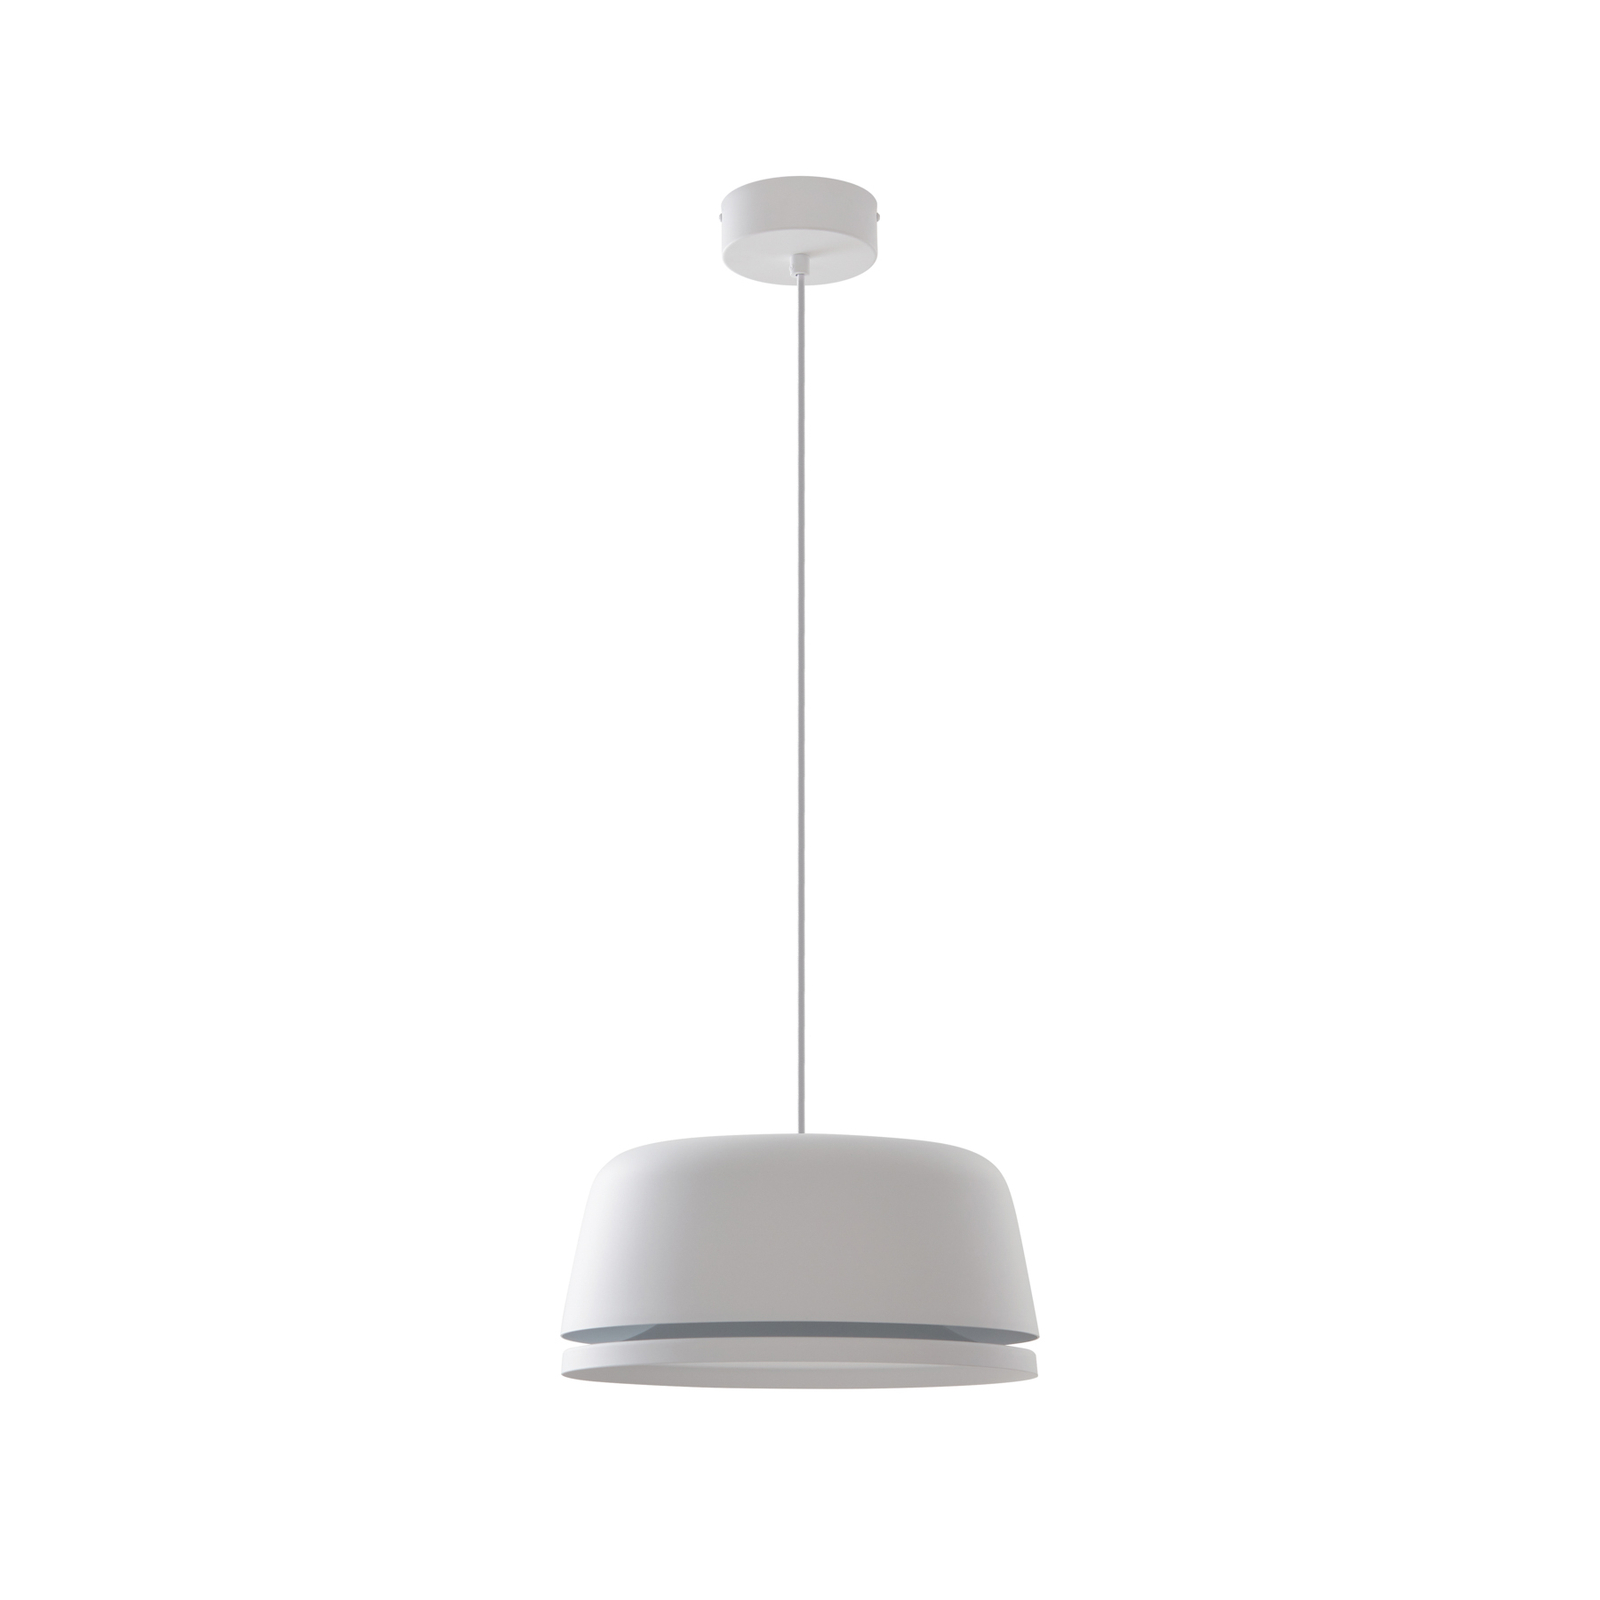 Lucande LED-es függőlámpa Faelinor, fehér, alumínium, Ø 35 cm